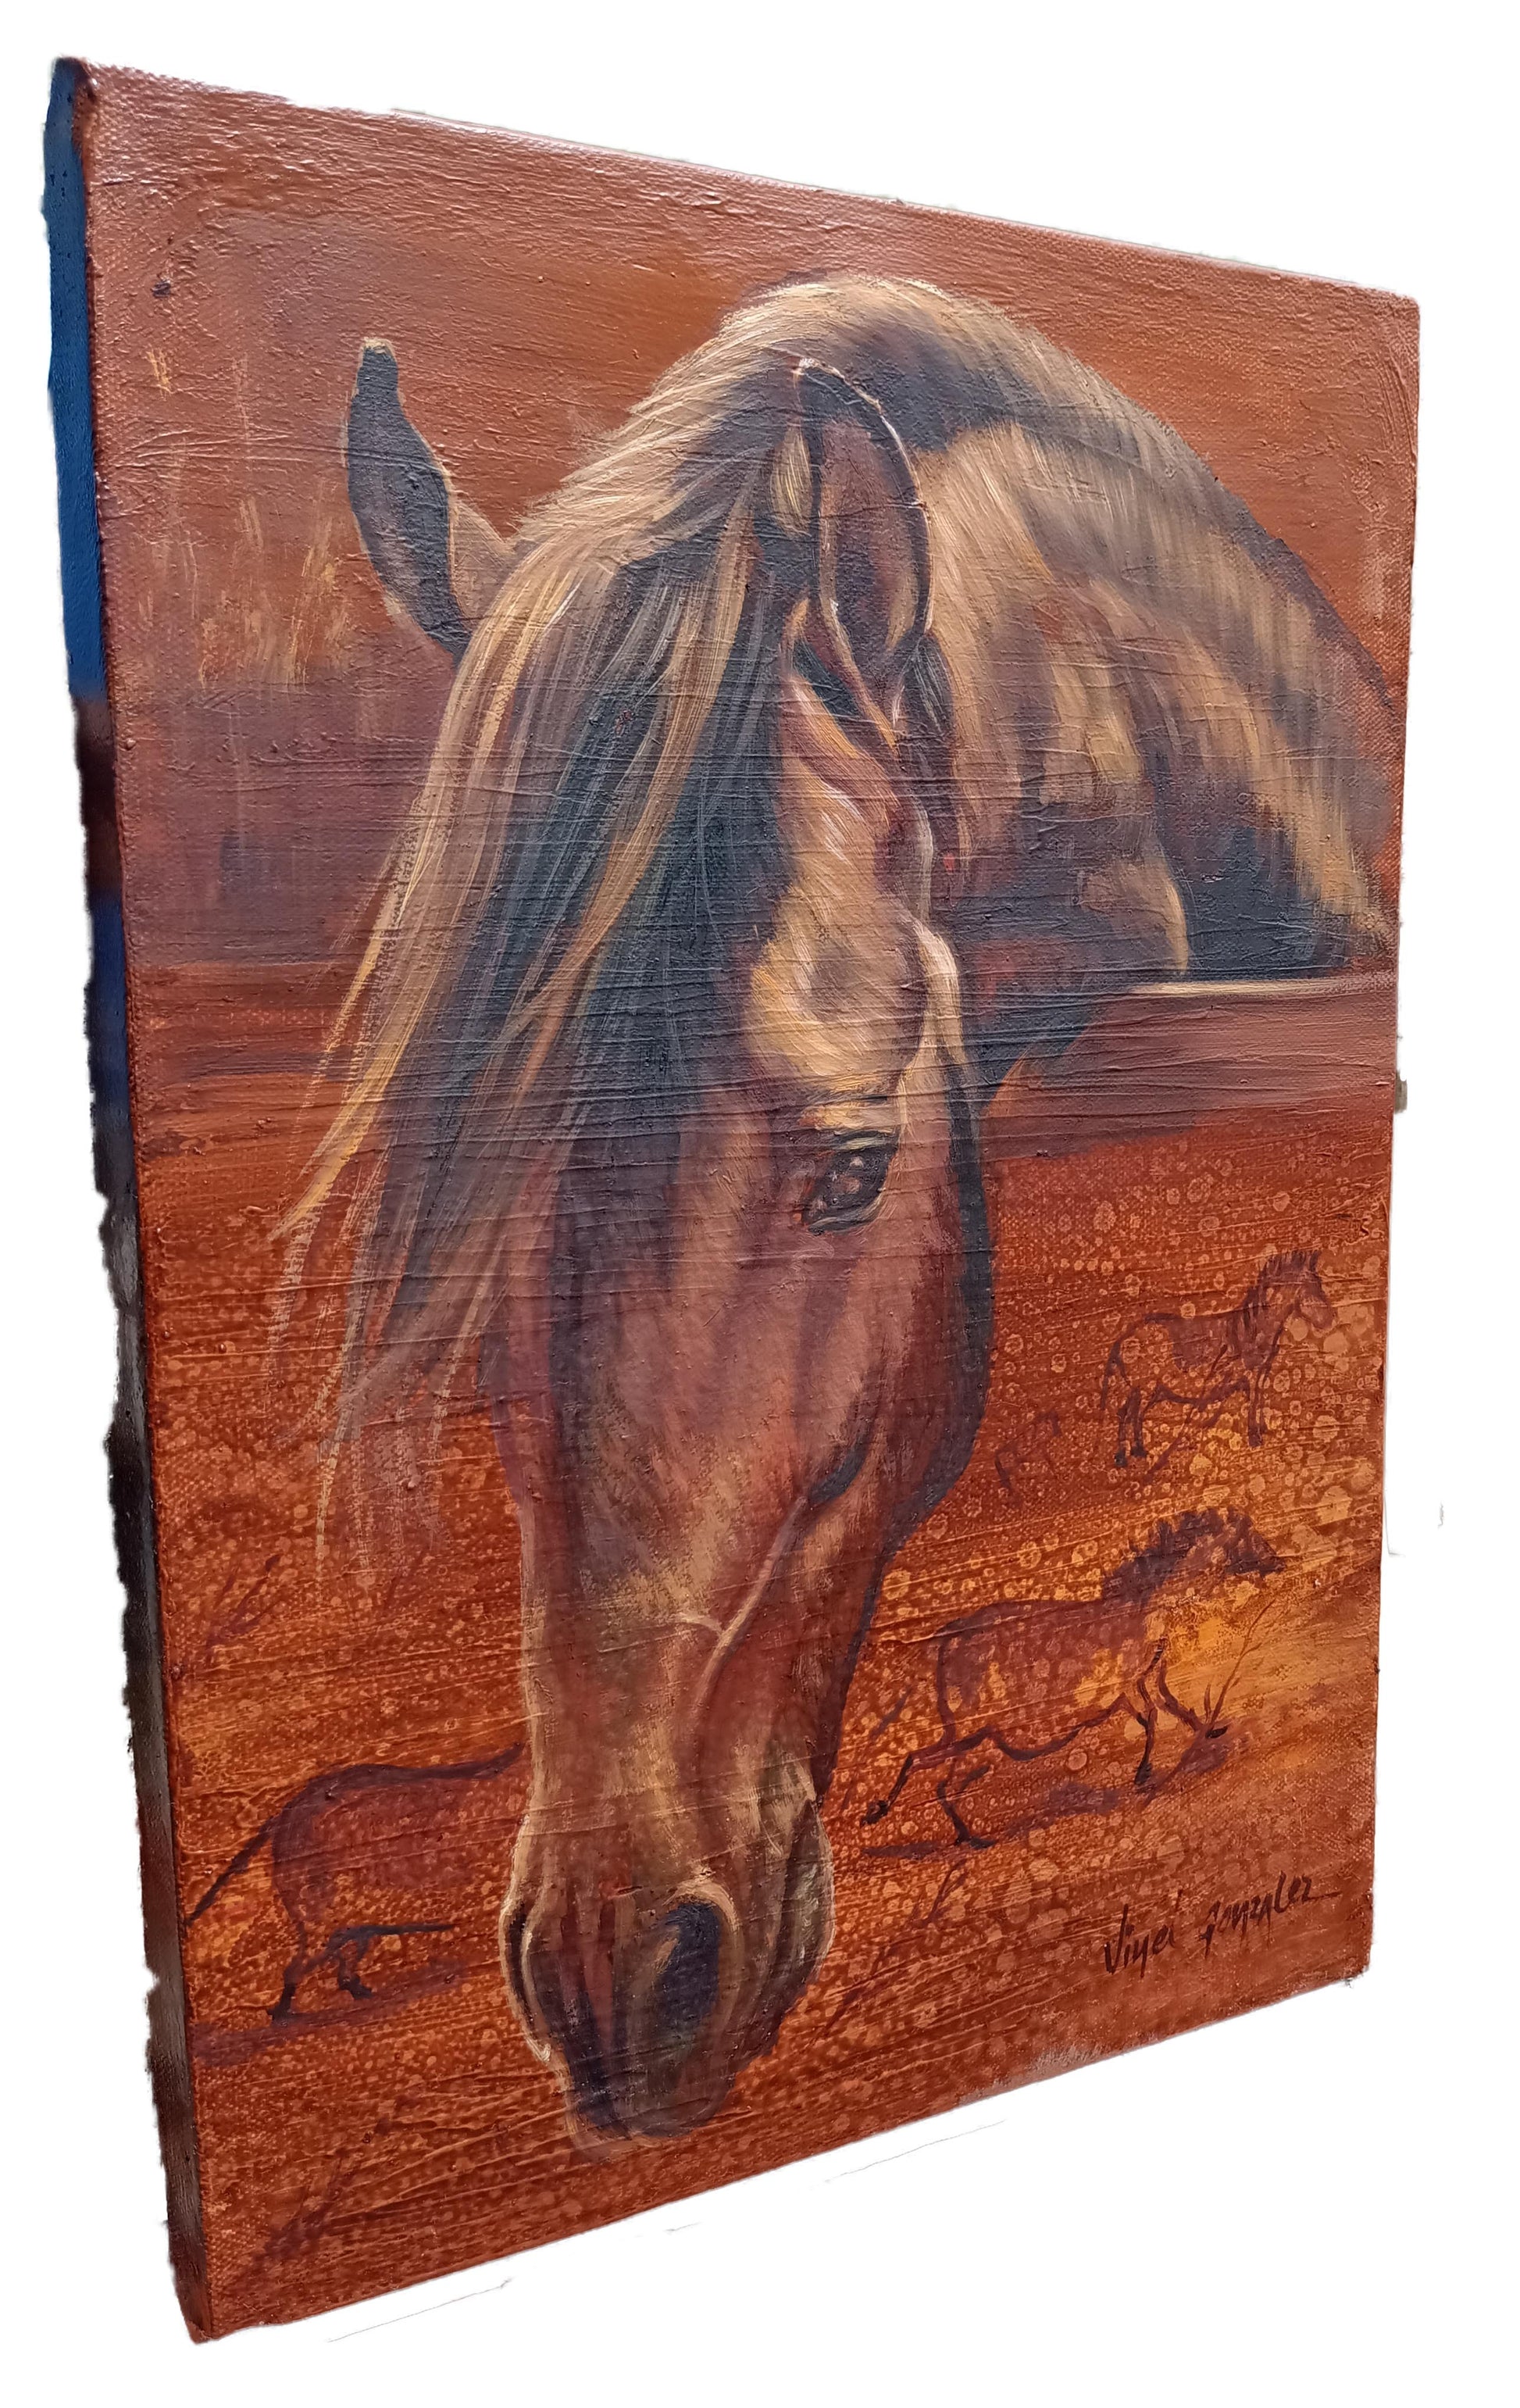 Horse side view art - Pictograms - Canvas - wall decoration - kmnk deco